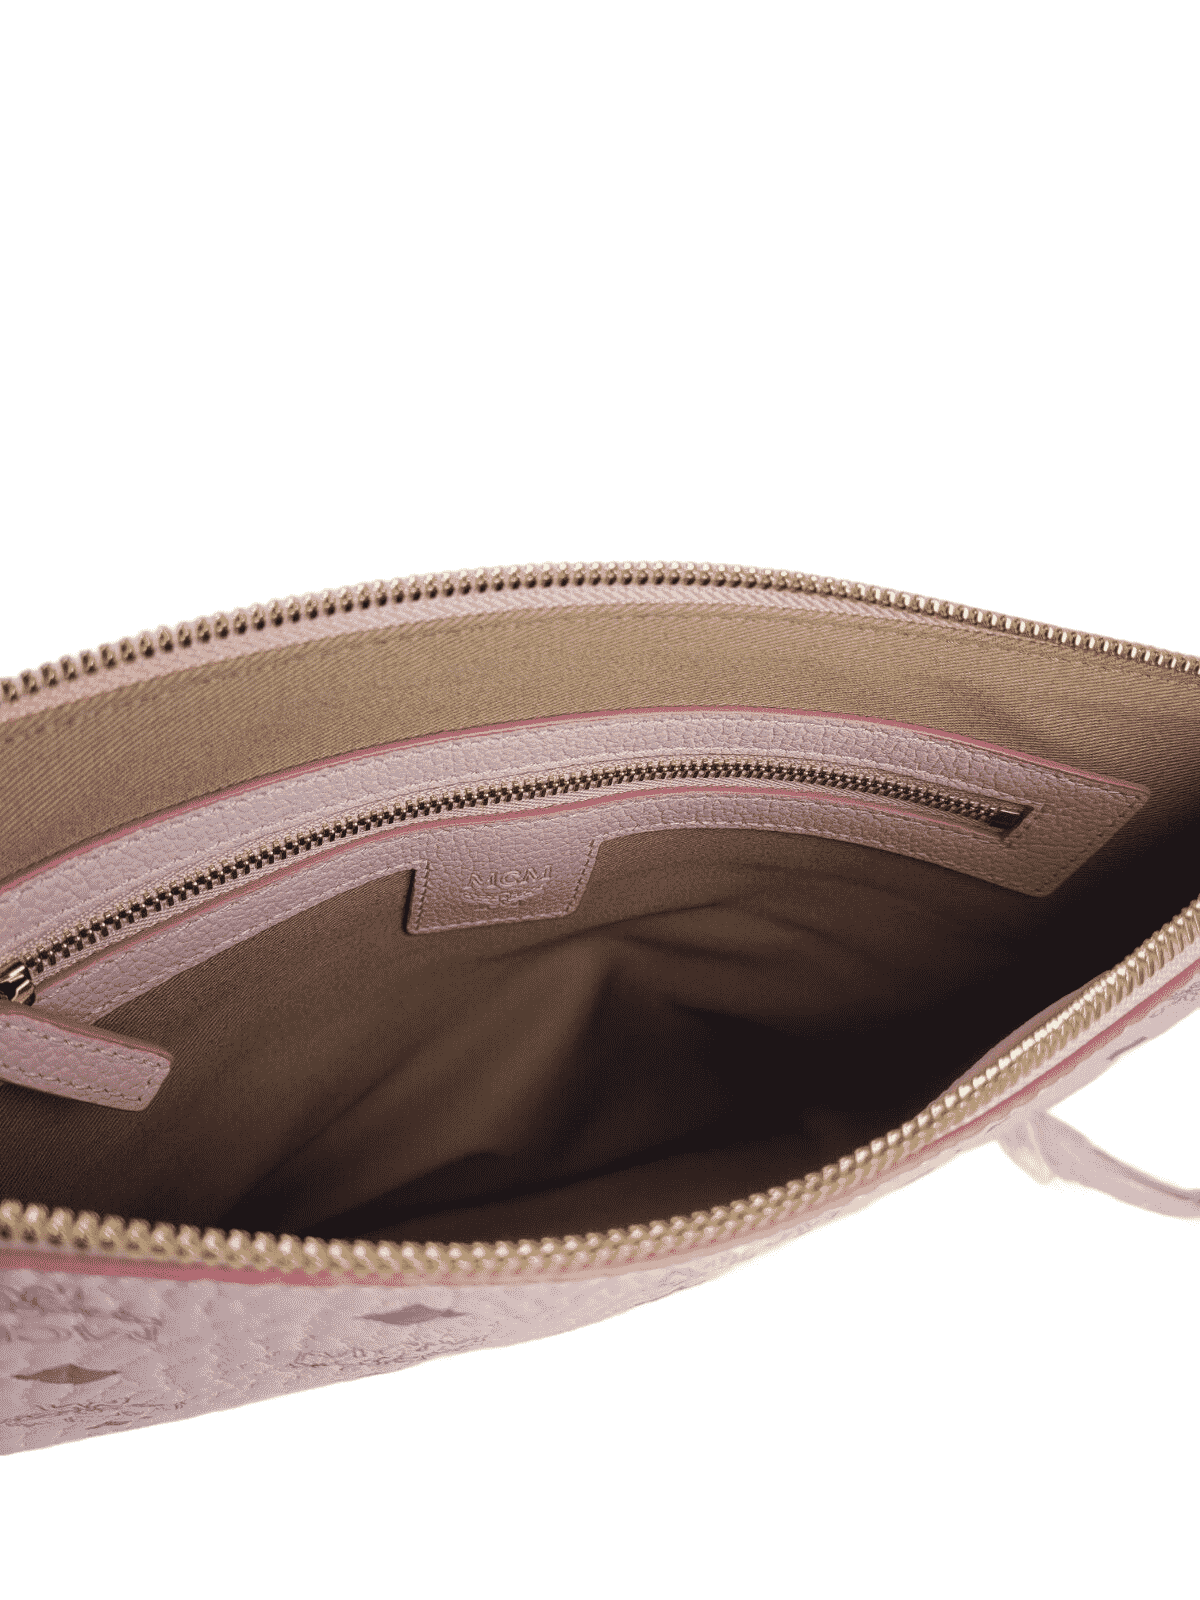 BNWT MCM Visetos Crossbody Bag Large Pouch, Powder Pink/Black $430 (+ $40  CA tx)